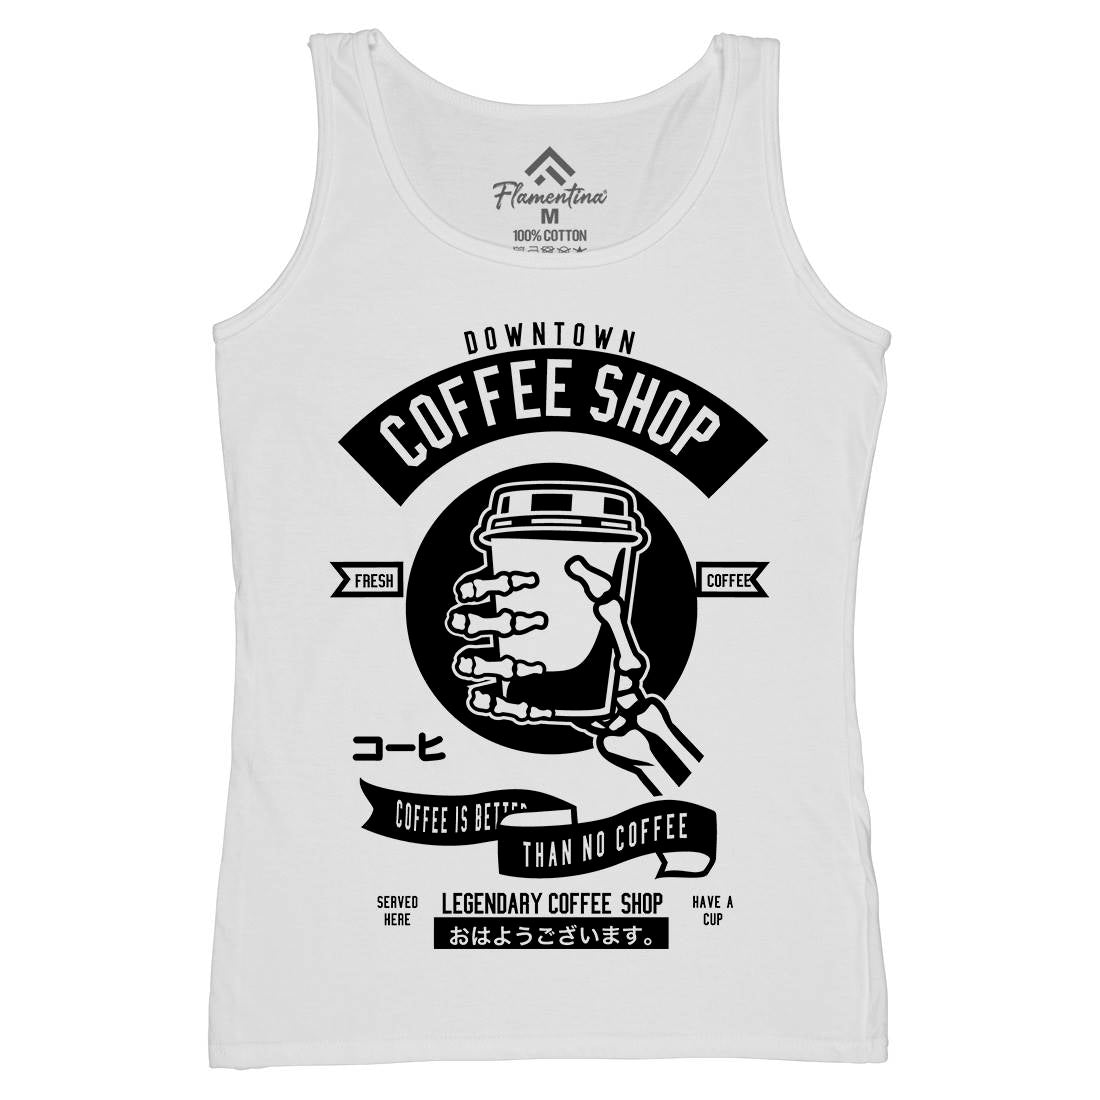 Coffee Shop Womens Organic Tank Top Vest Drinks B517